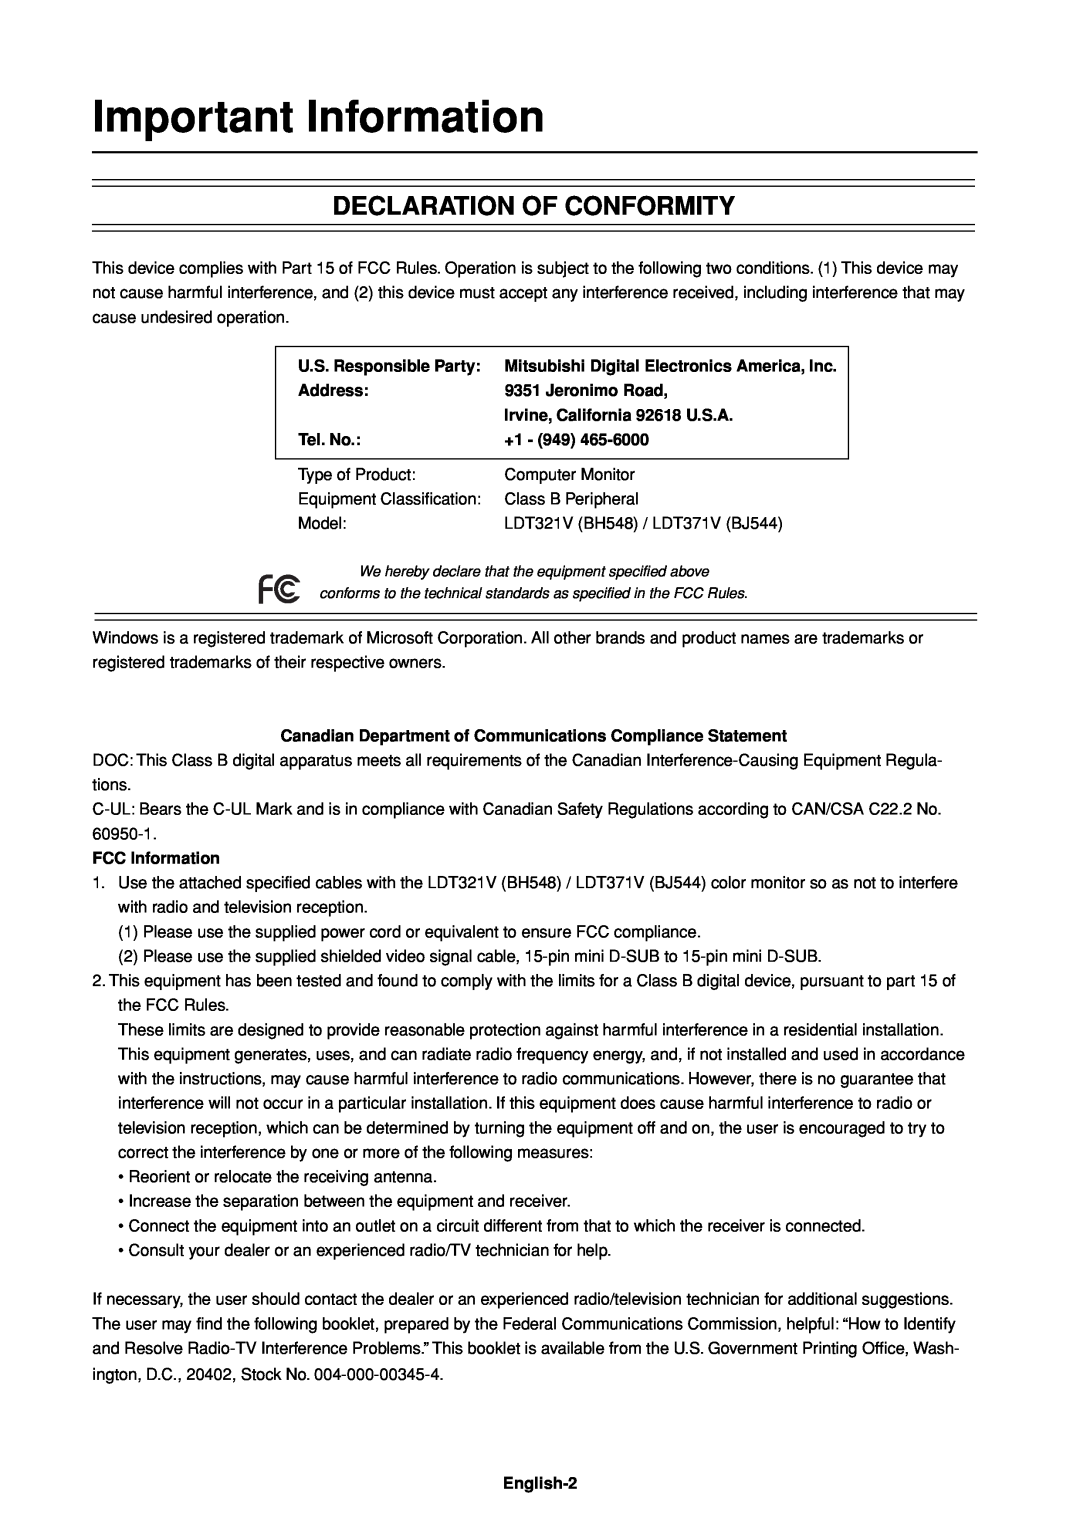 Mitsubishi Electronics LDT32IV (BH548), LDT37IV (BH544) manual Important Information, Declaration Of Conformity 